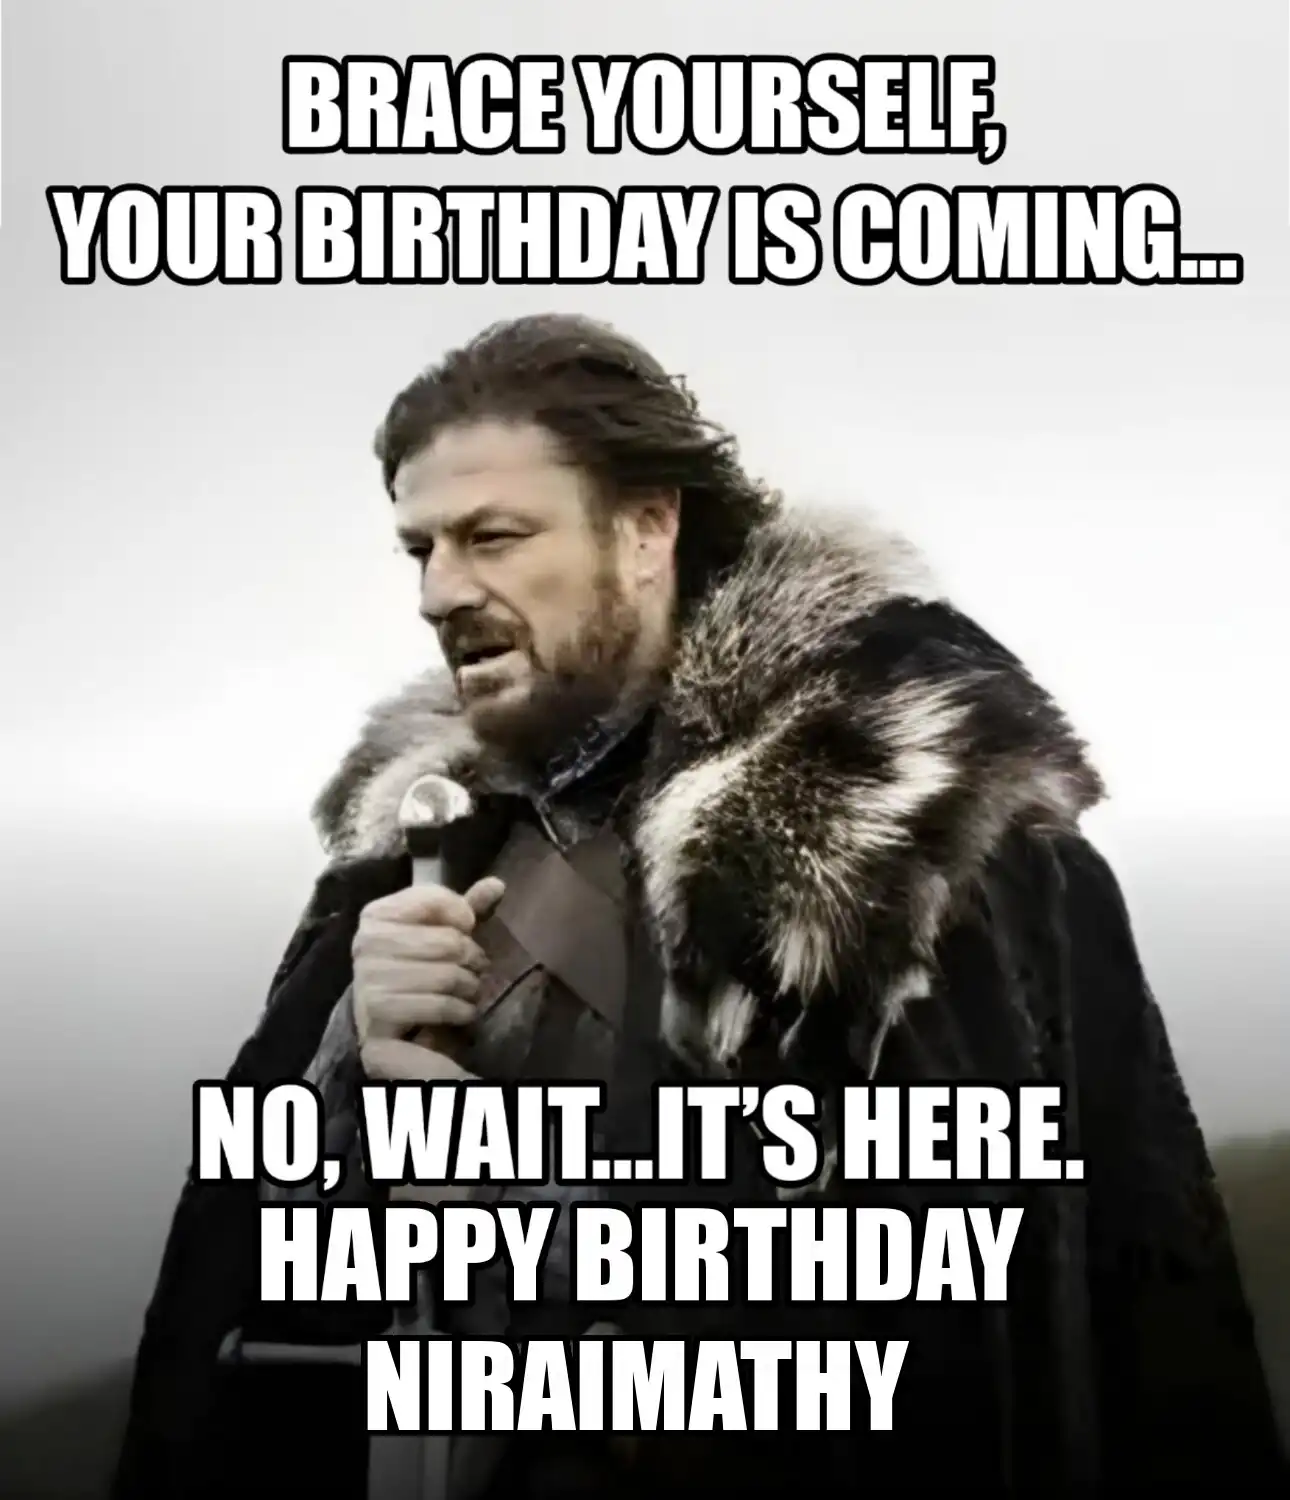 Happy Birthday Niraimathy Brace Yourself Your Birthday Is Coming Meme